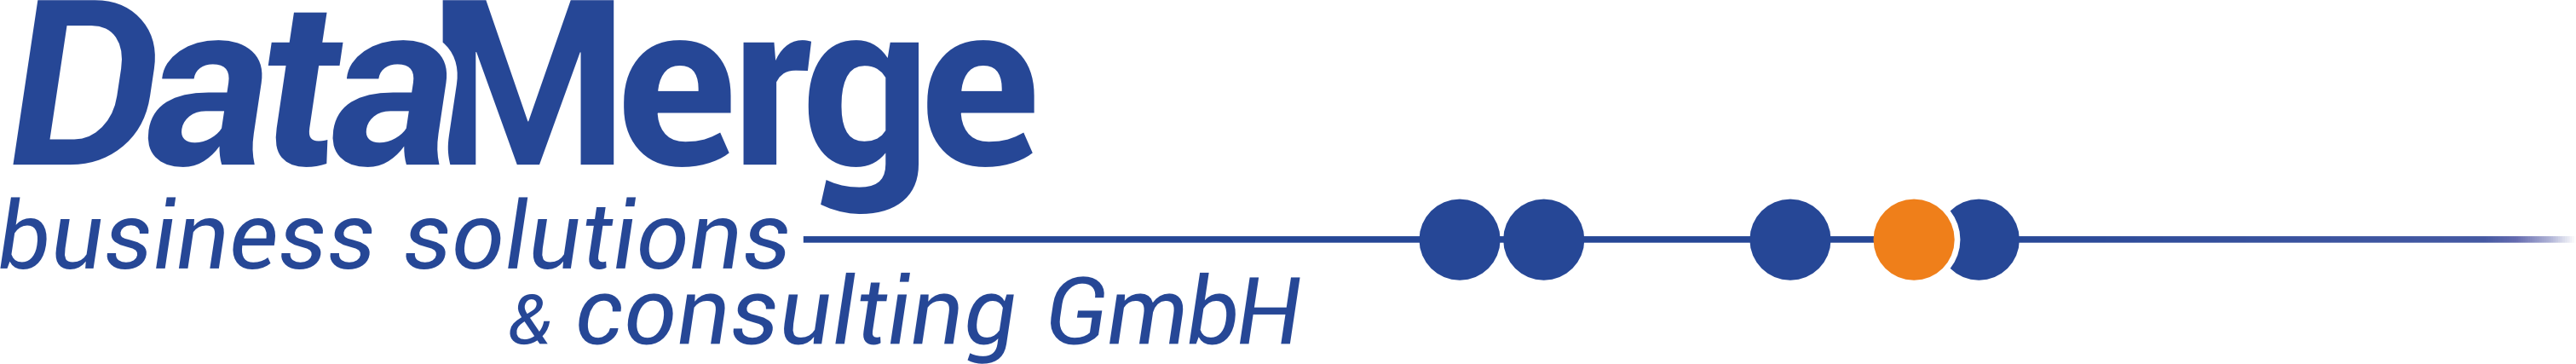 Datamerge Logo